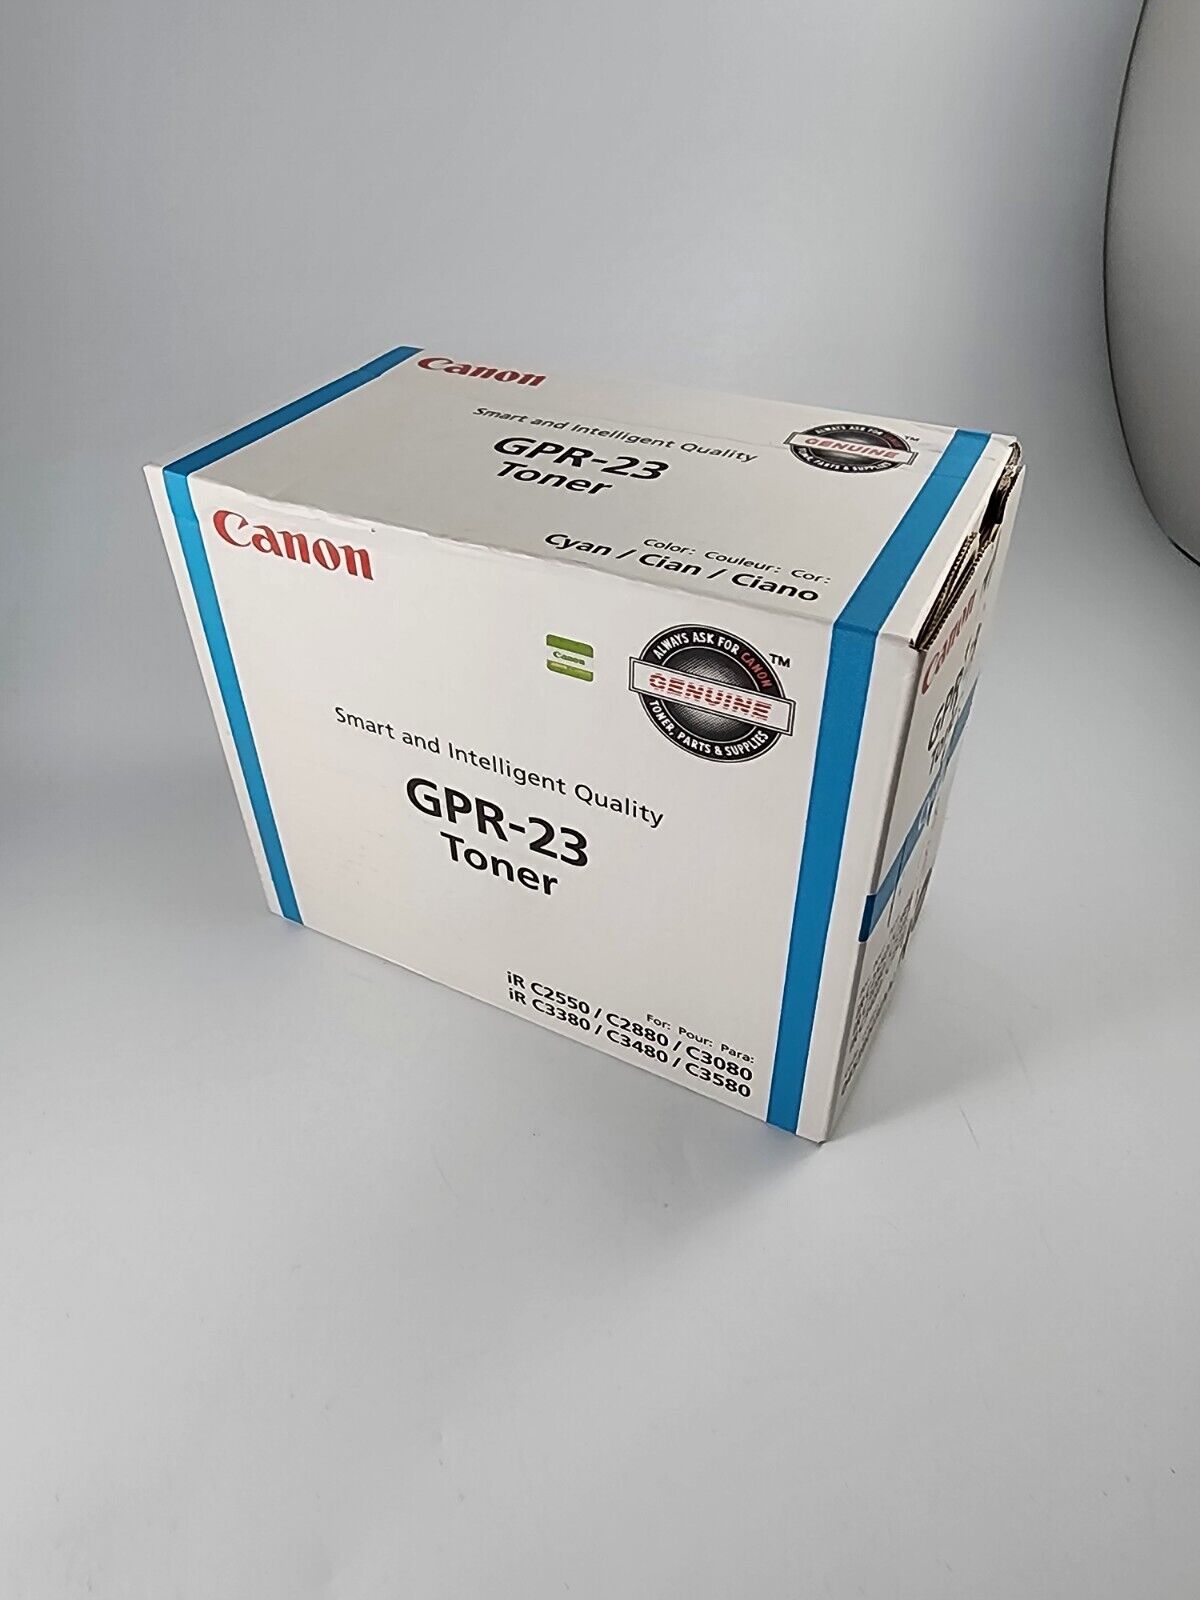 Genuine Canon GPR 23 Toner CYAN Sealed 0453B003AA NEW